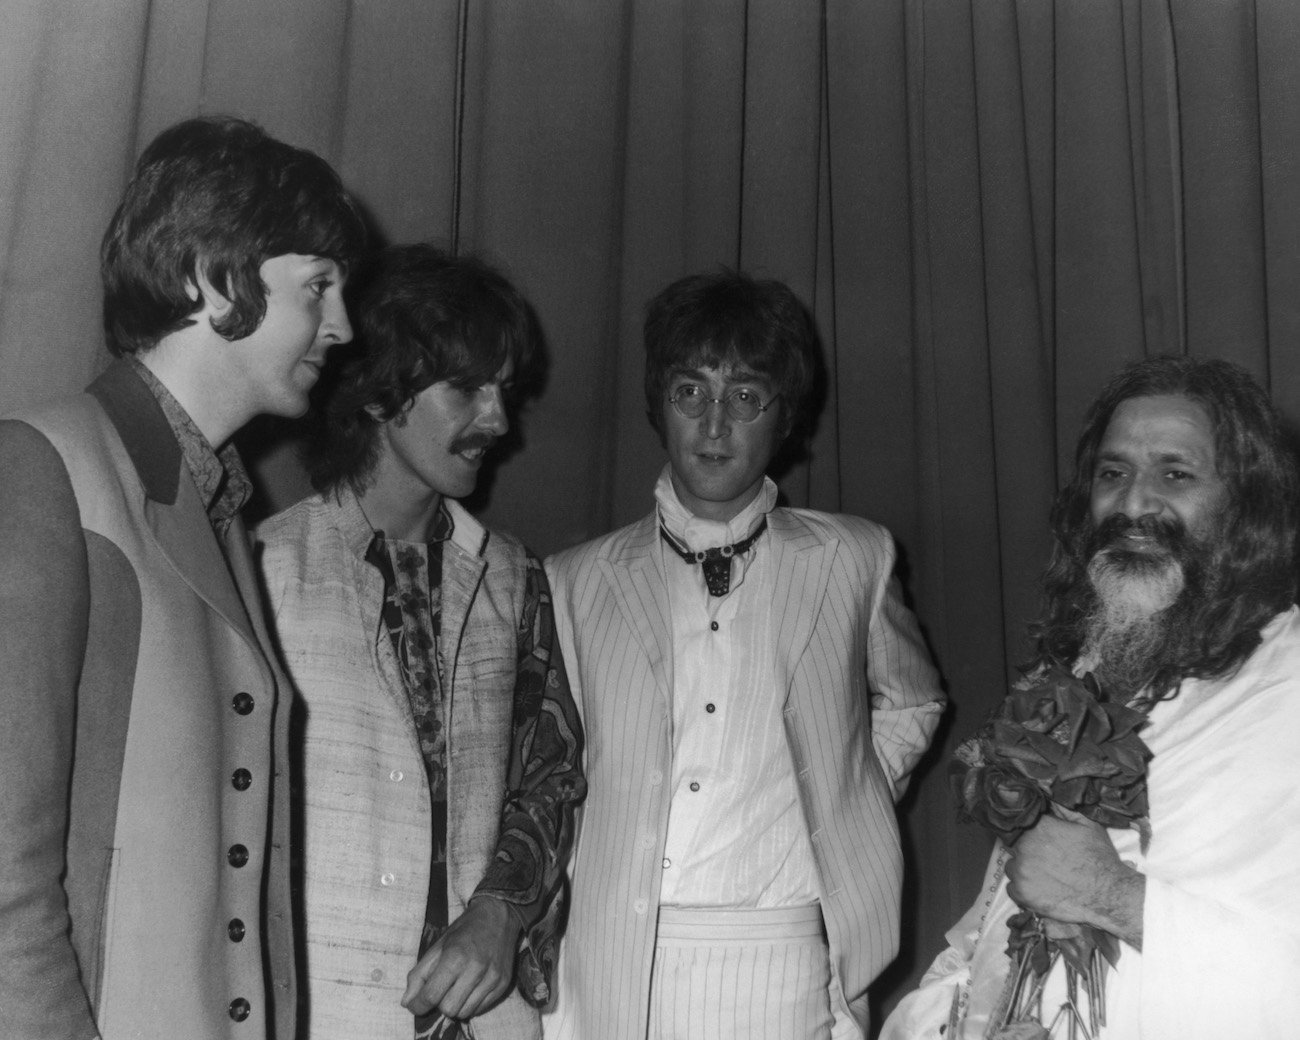 Paul McCartney, George Harrison, and John Lennon, speaking with the Maharishi Mahesh Yogi in 1967.